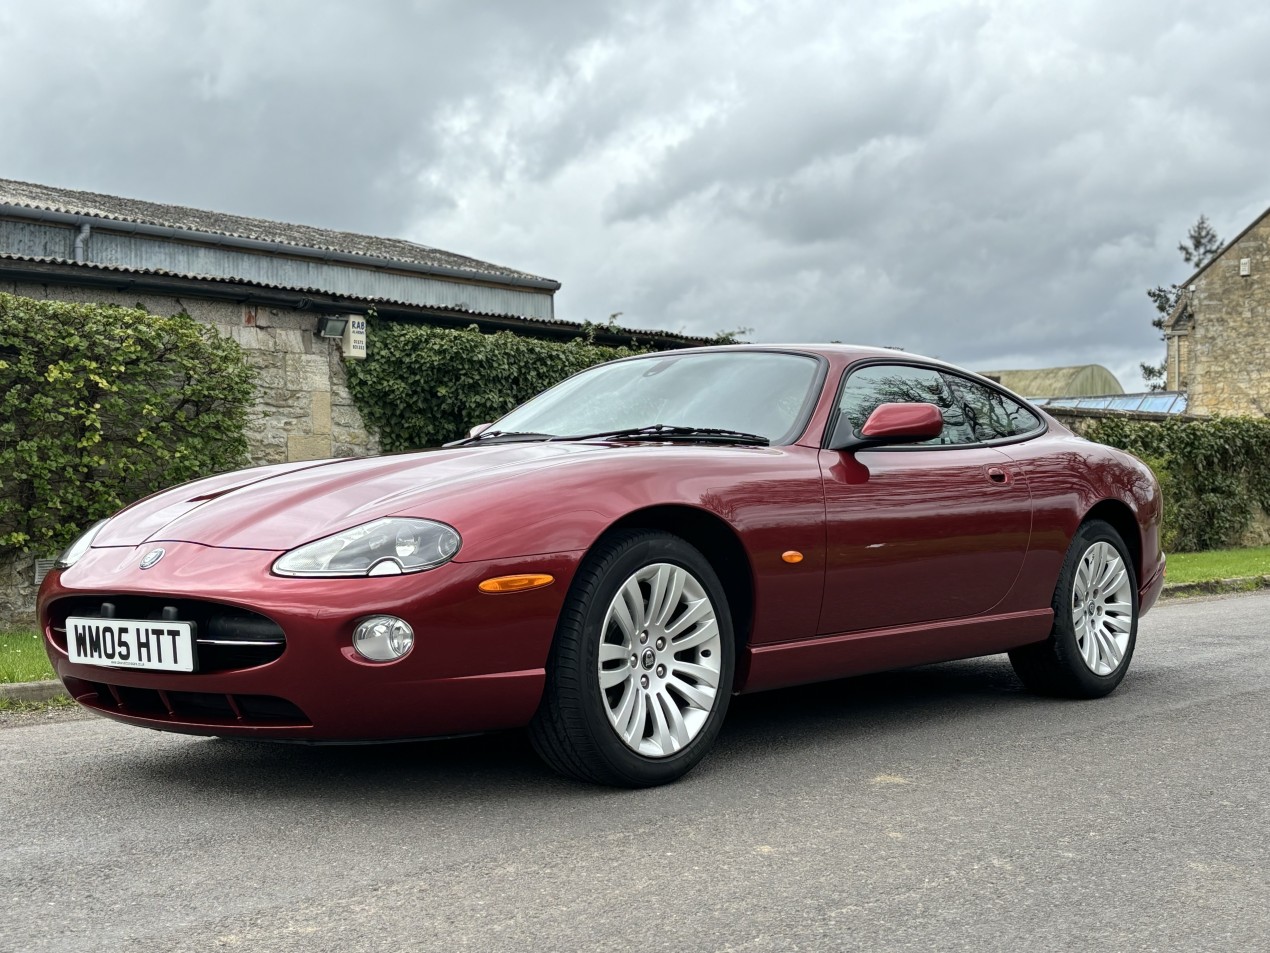 <a href="https://dillybrook.co.uk/product/2004-jaguar-xk8-4-2-v8-coupe/">2005 Jaguar XK8 4.2 V8</a>